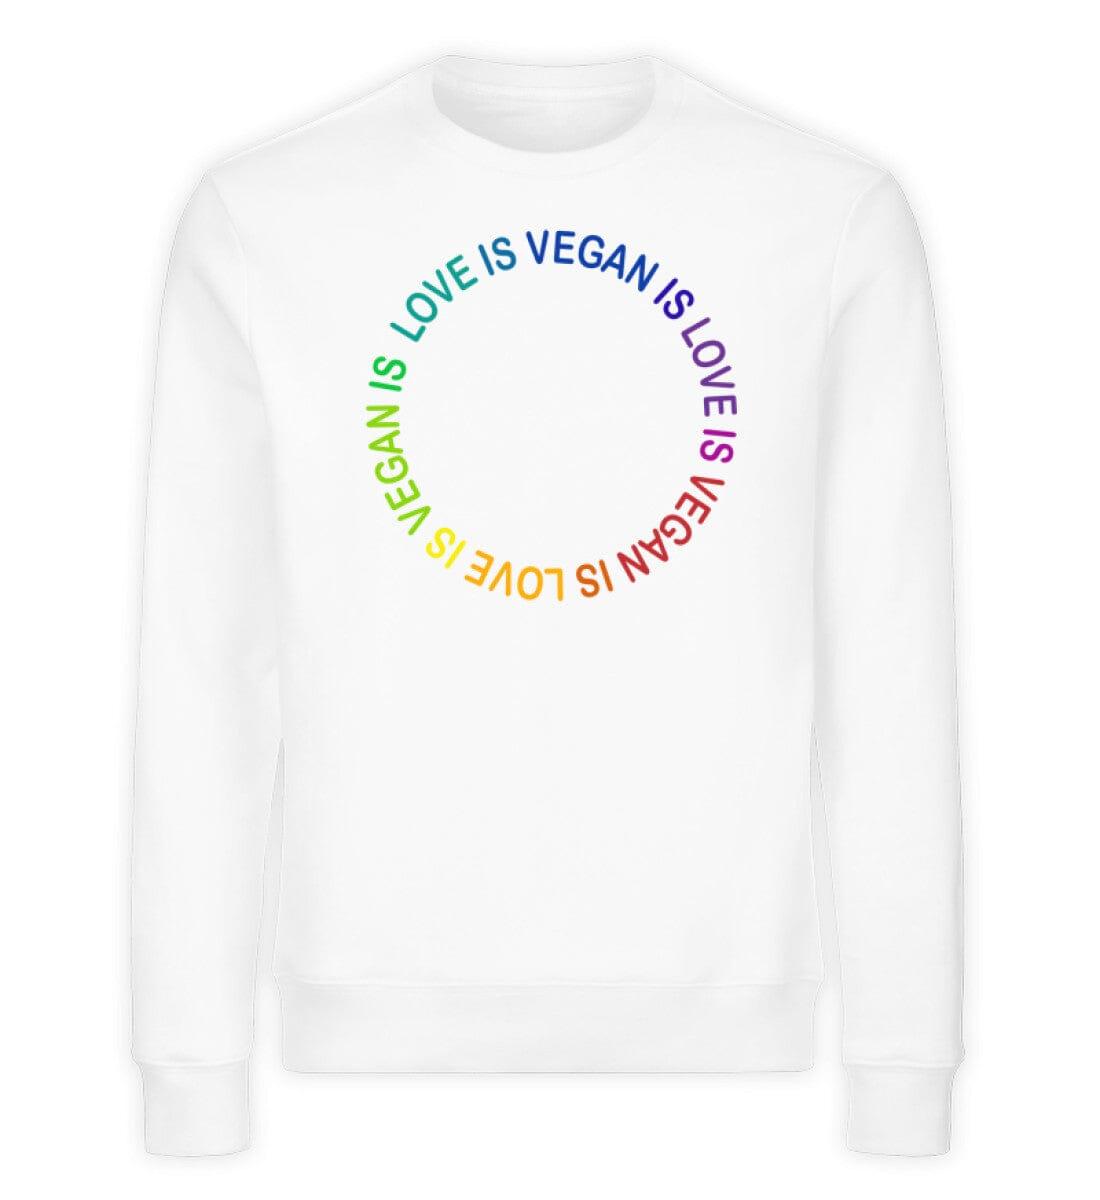 Vegan is love - Unisex Organic Sweatshirt - Team Vegan © vegan t shirt